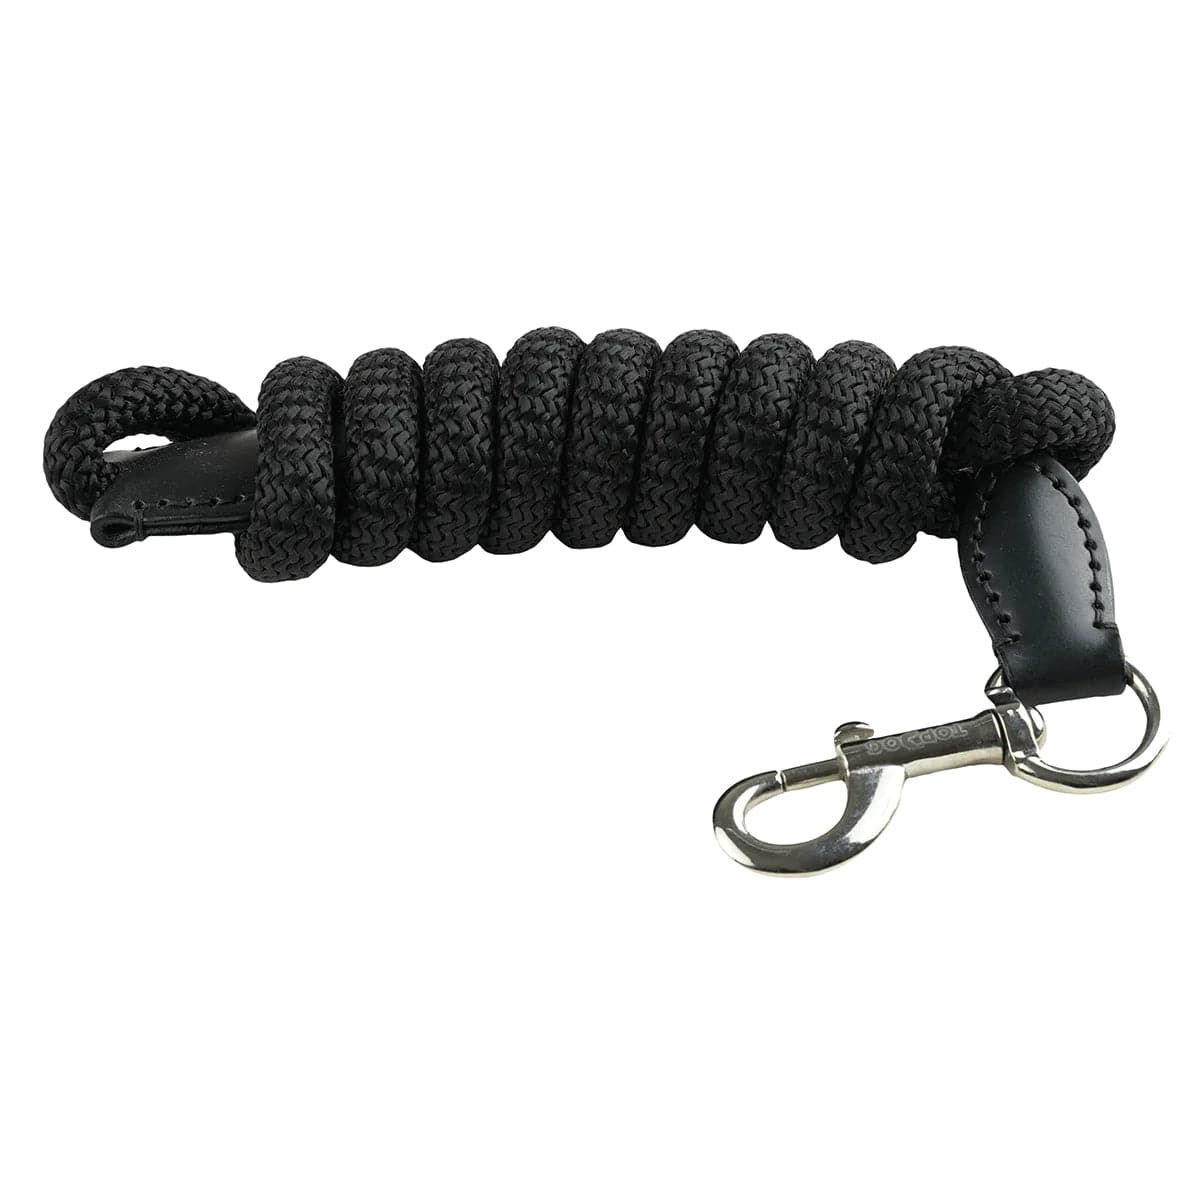 TOPDOG PREMIUM Nylon Rope Leash - Black, Large